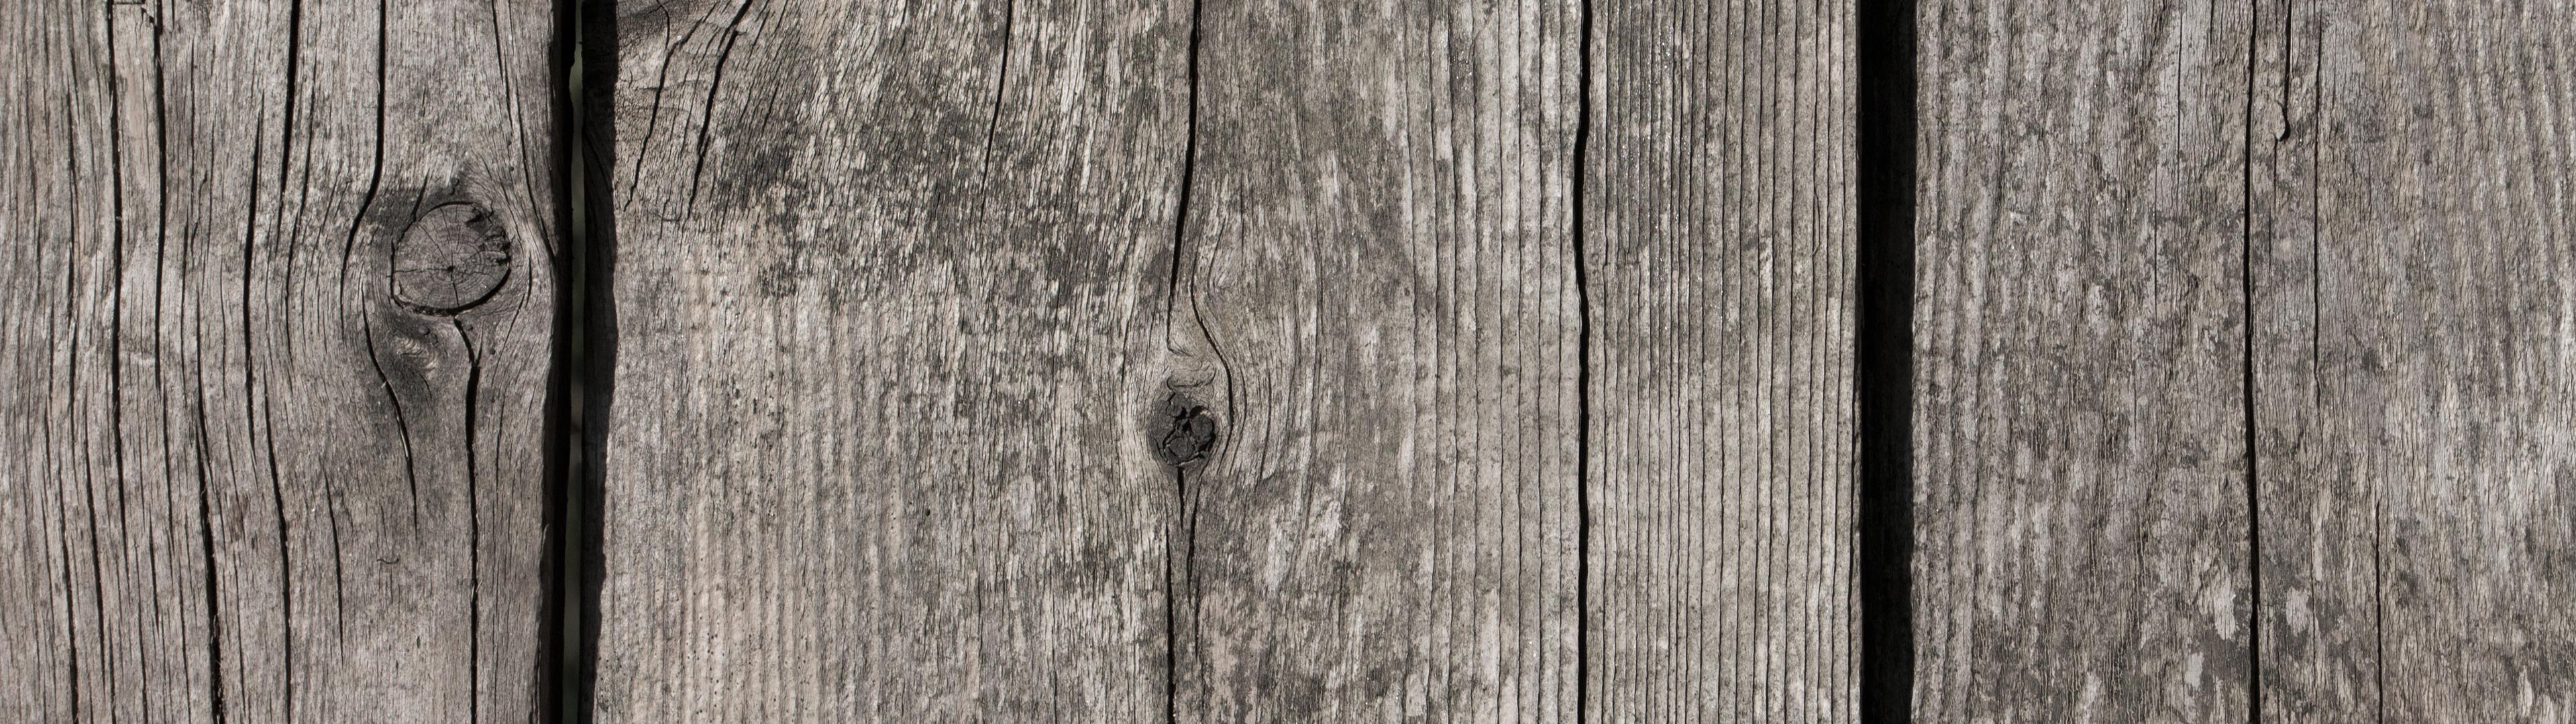 Knots in the old wood desktop wallpaper 236